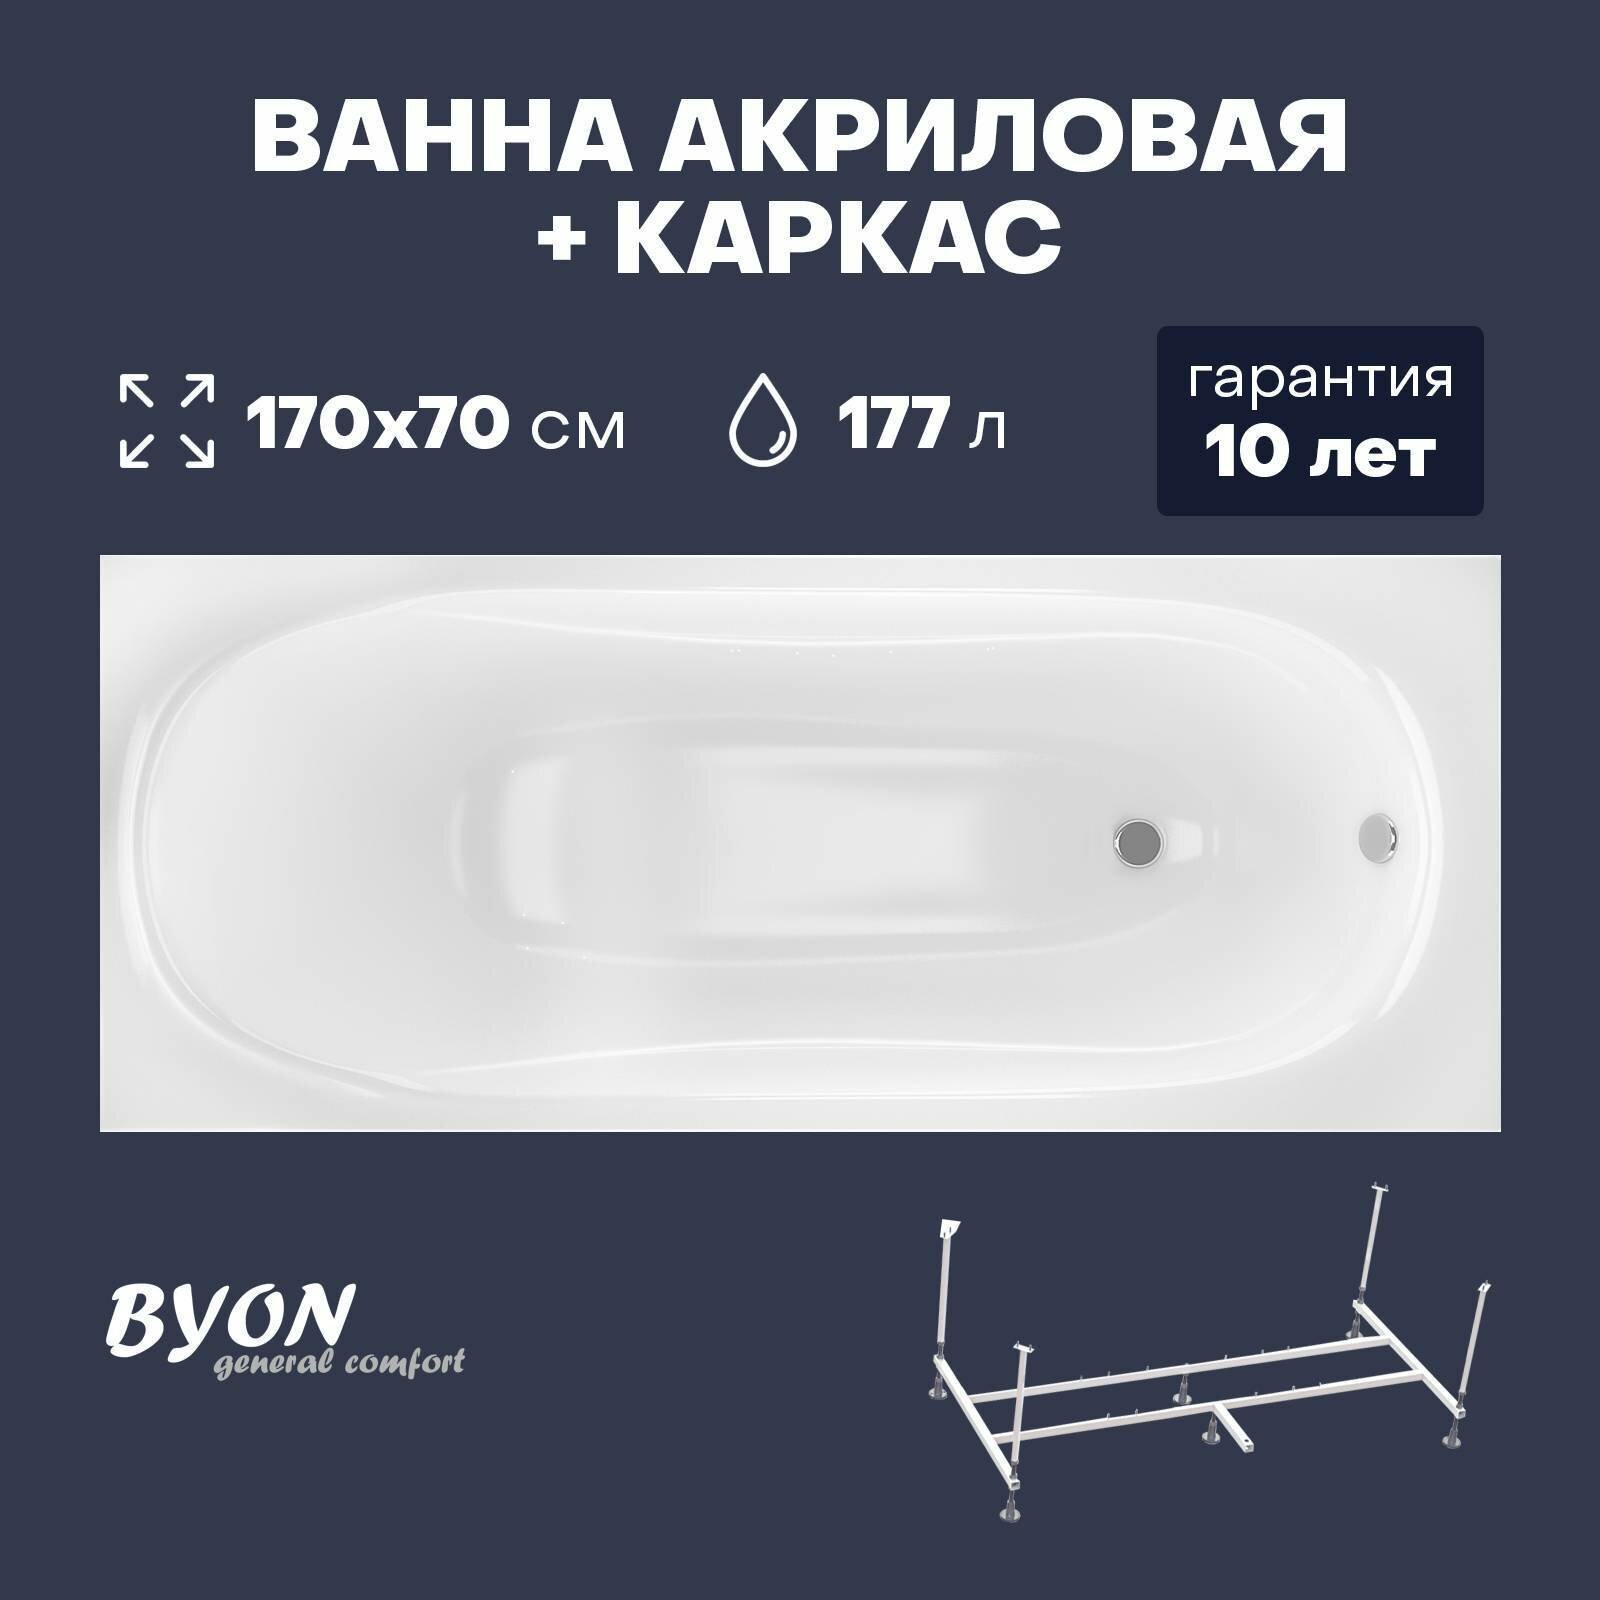 Ванна акриловая Byon Agesta 170х70х59 см в комплекте с каркасом